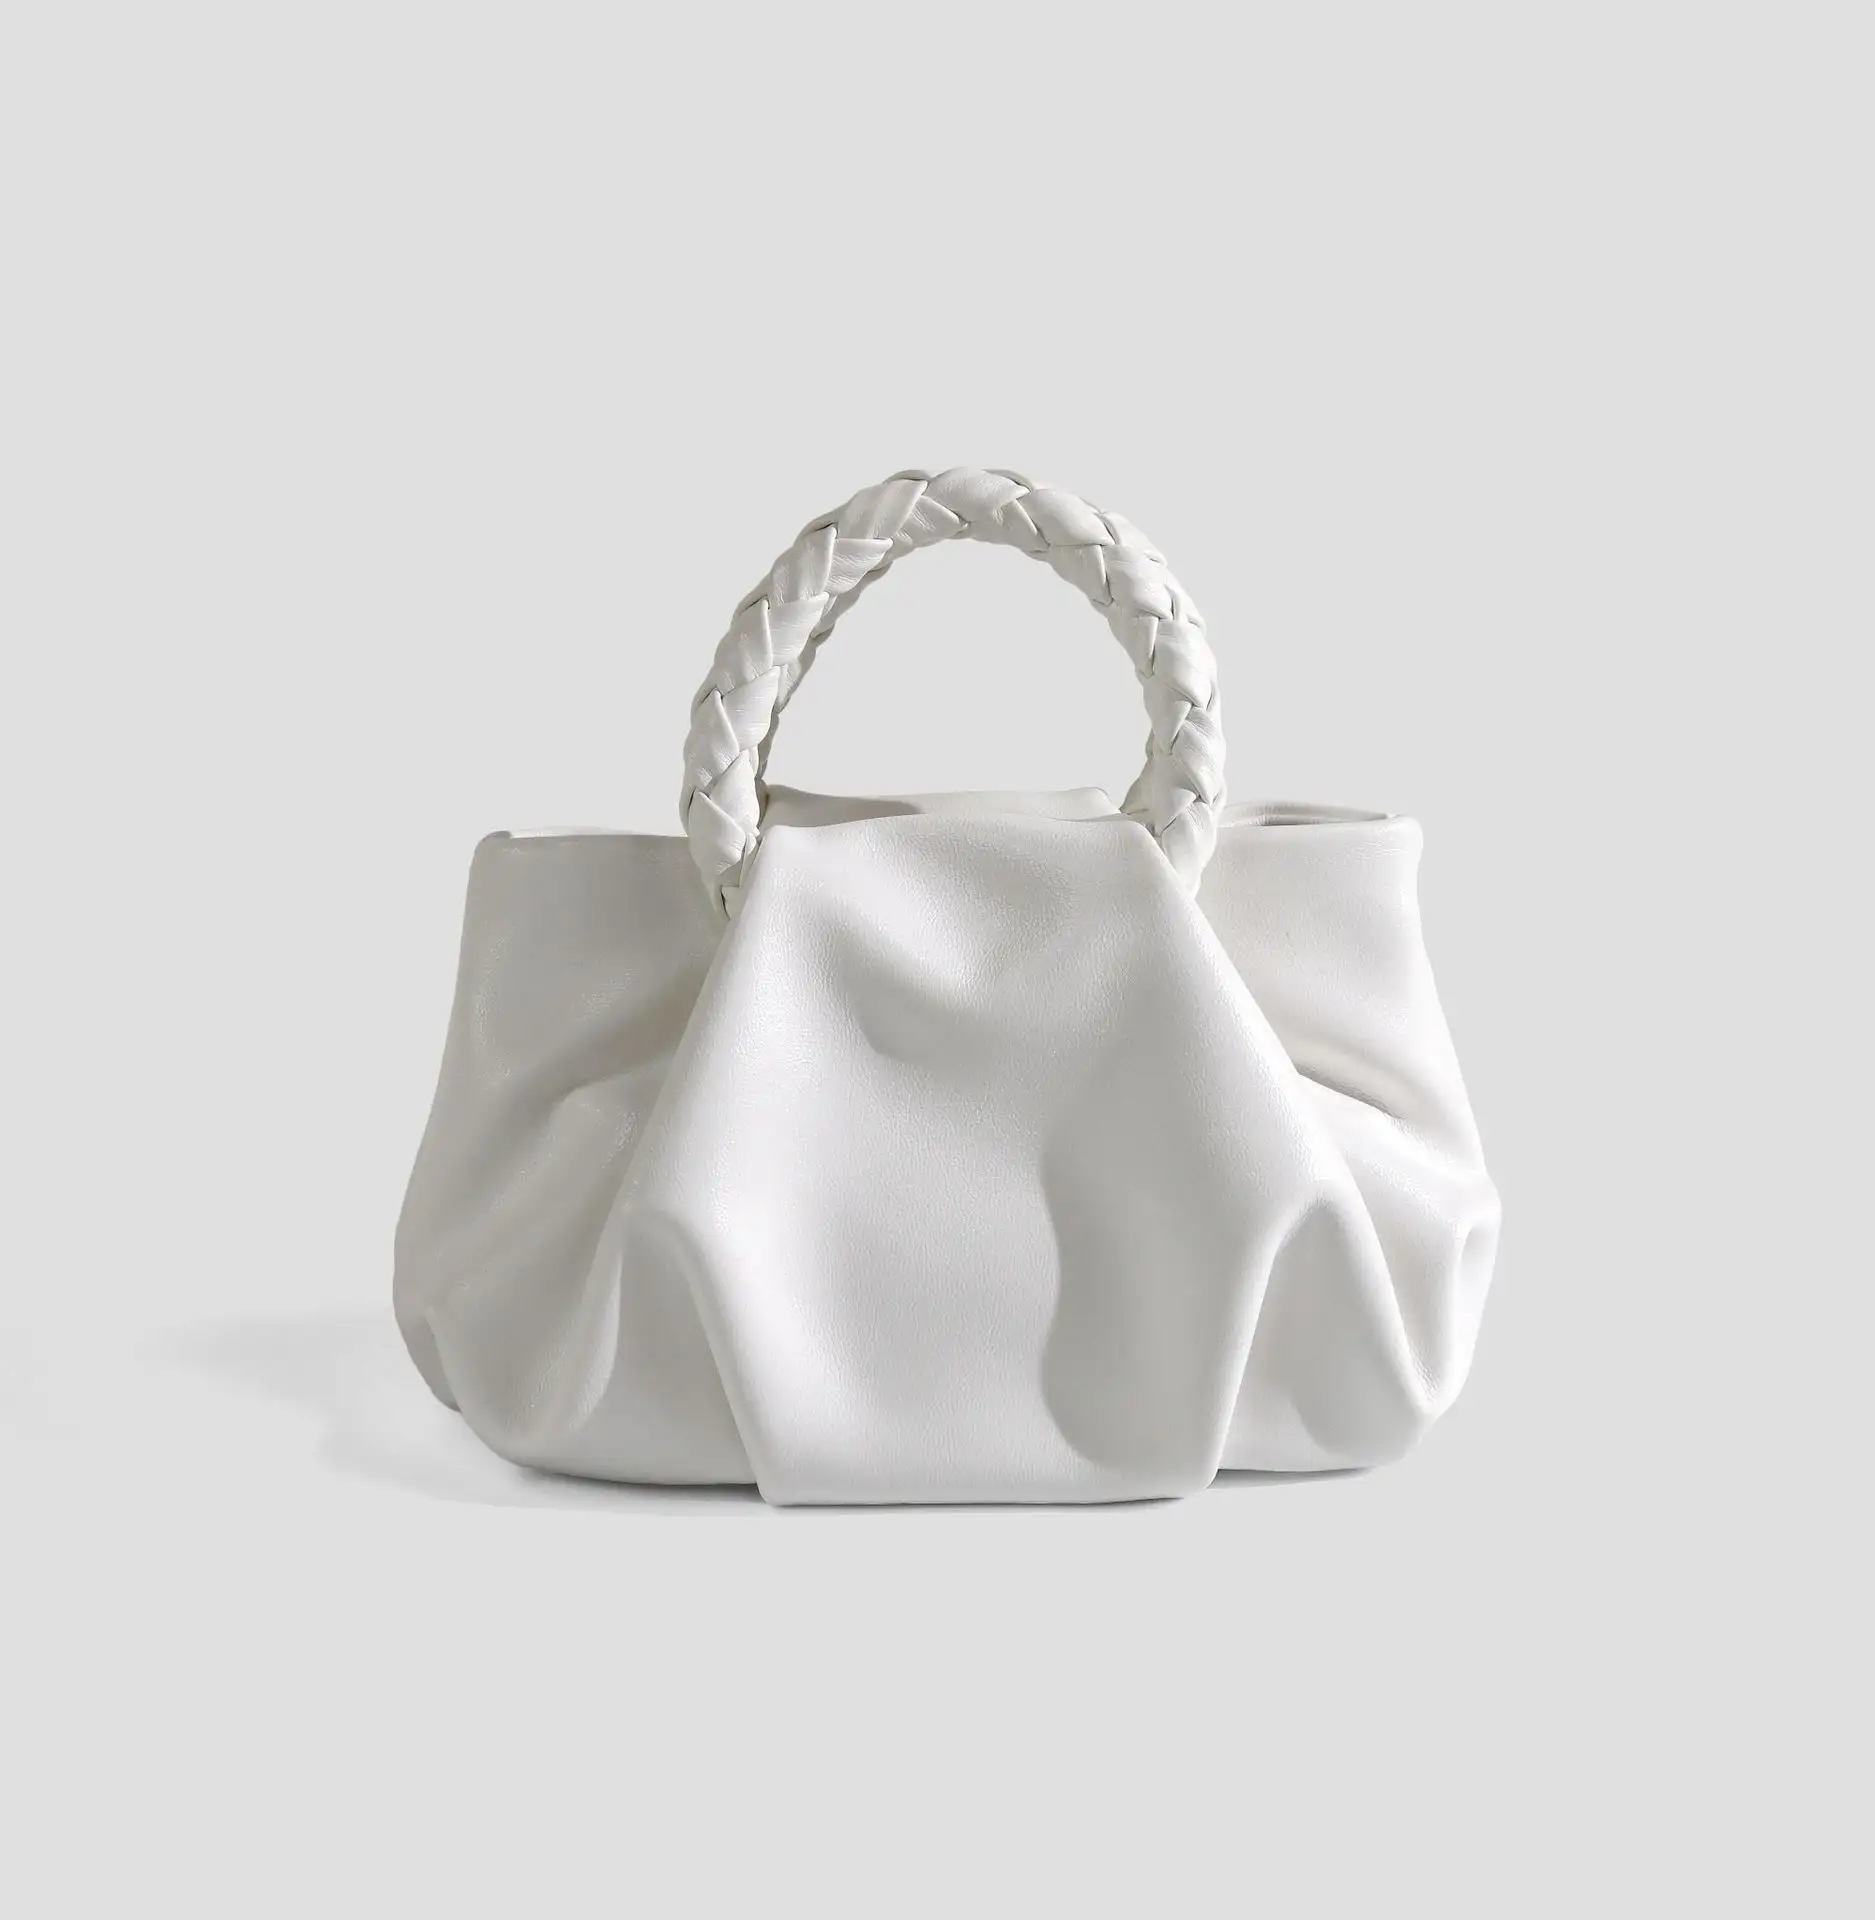 Stylish Bolso De Las Senoras Weave Top Handle Vegen Leather Bag Classic PU Handbag for Women Crossbody Pleated Cloud Bag